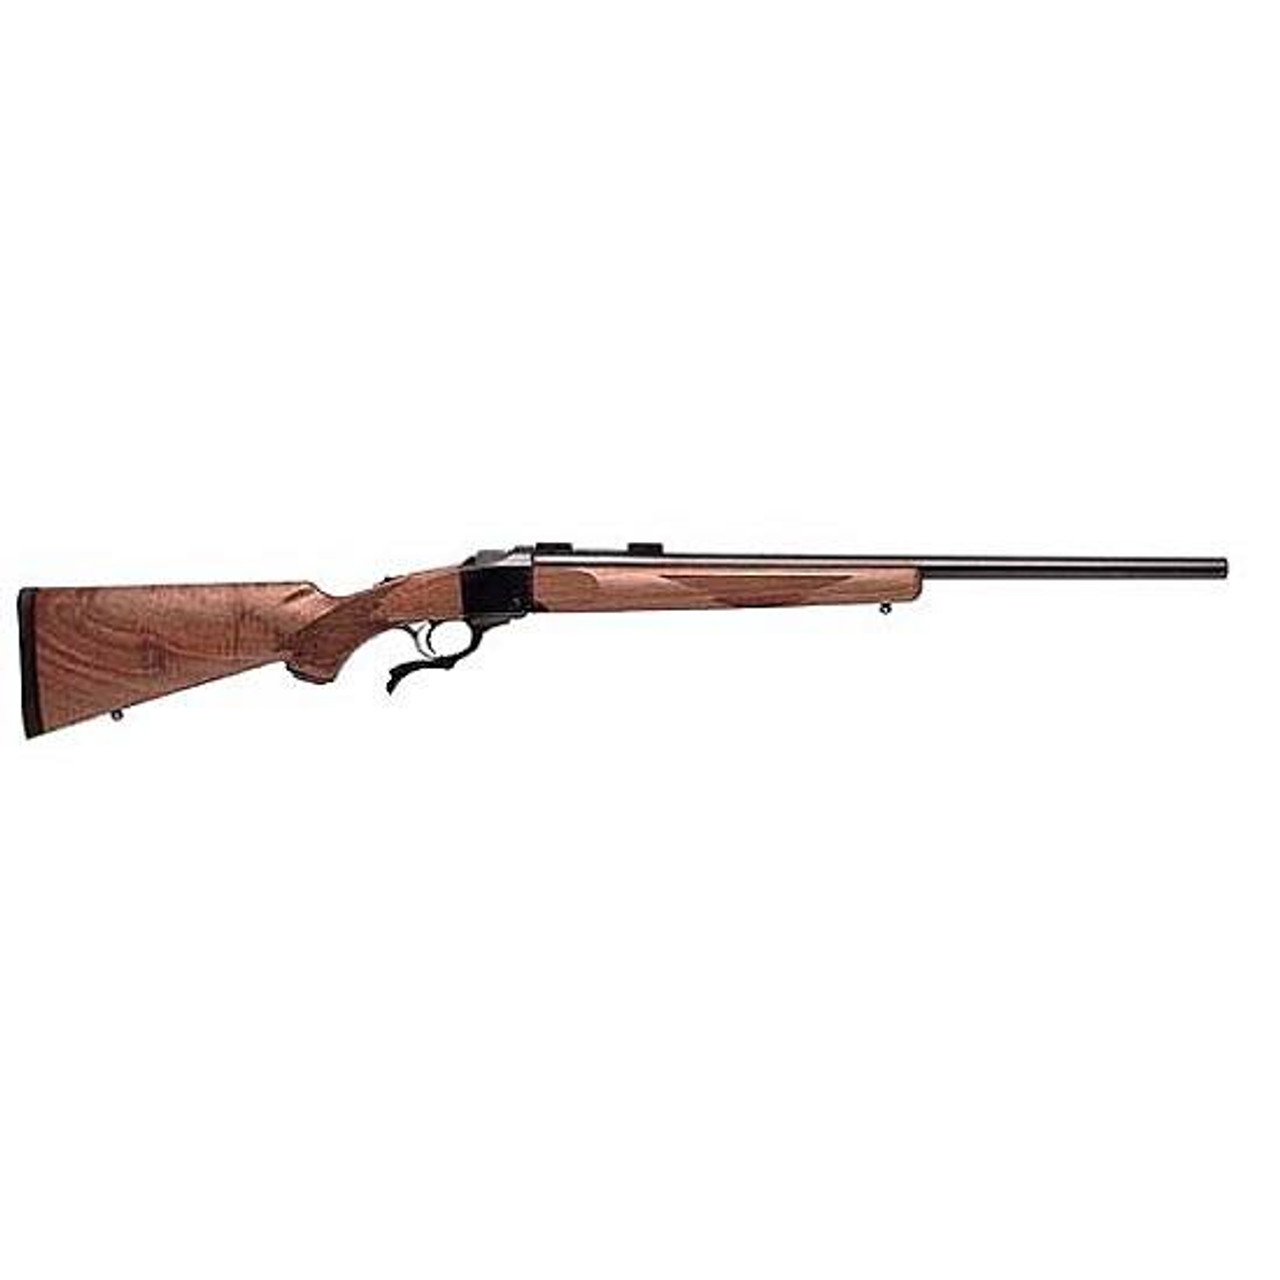 Ruger No1 Varminter Single Shot Centerfire Rifle 223 Remington 24